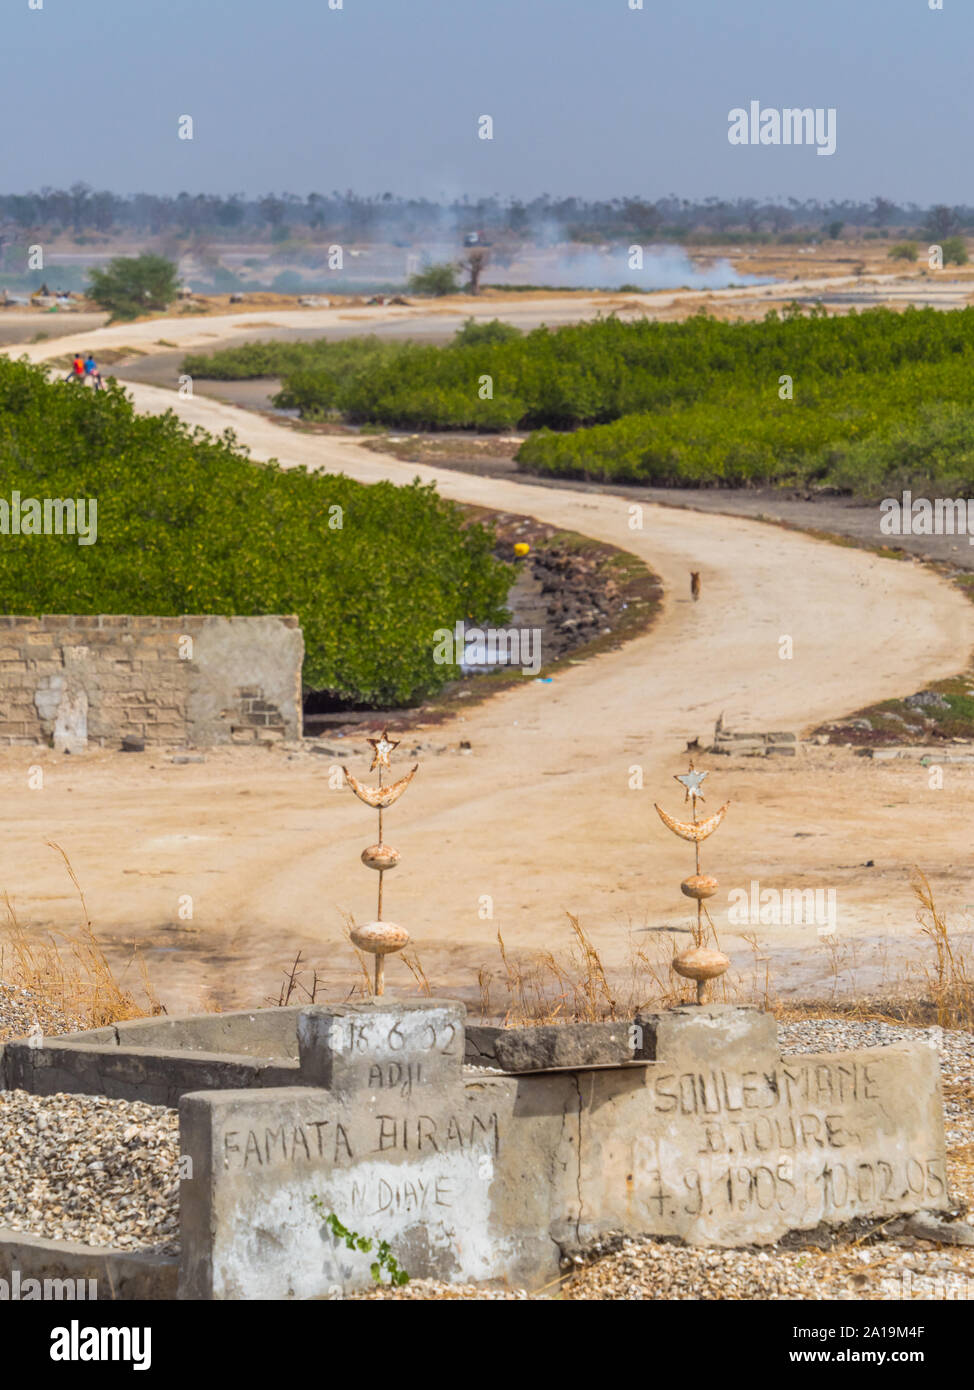 Joal-Fadiout, Senegal - Gennaio, 26, 2019: musulmana graves sul cimitero. Una strada tortuosa in background Joal-Fadiouth townl. L'Africa. Foto Stock